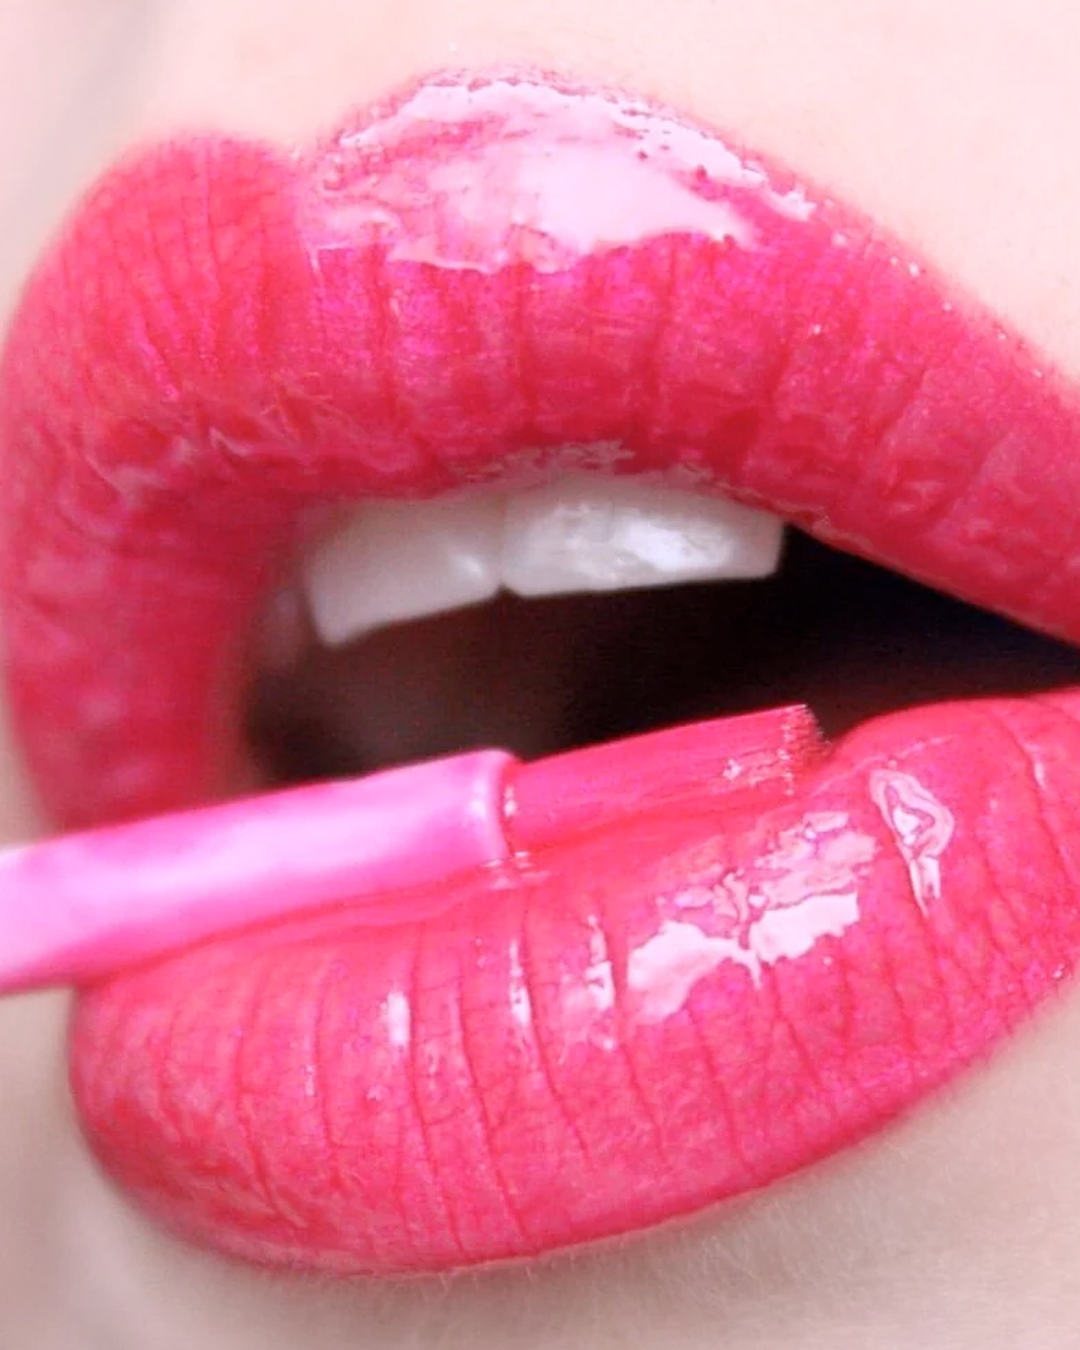 Flushing Fuchsia on a model's lips.